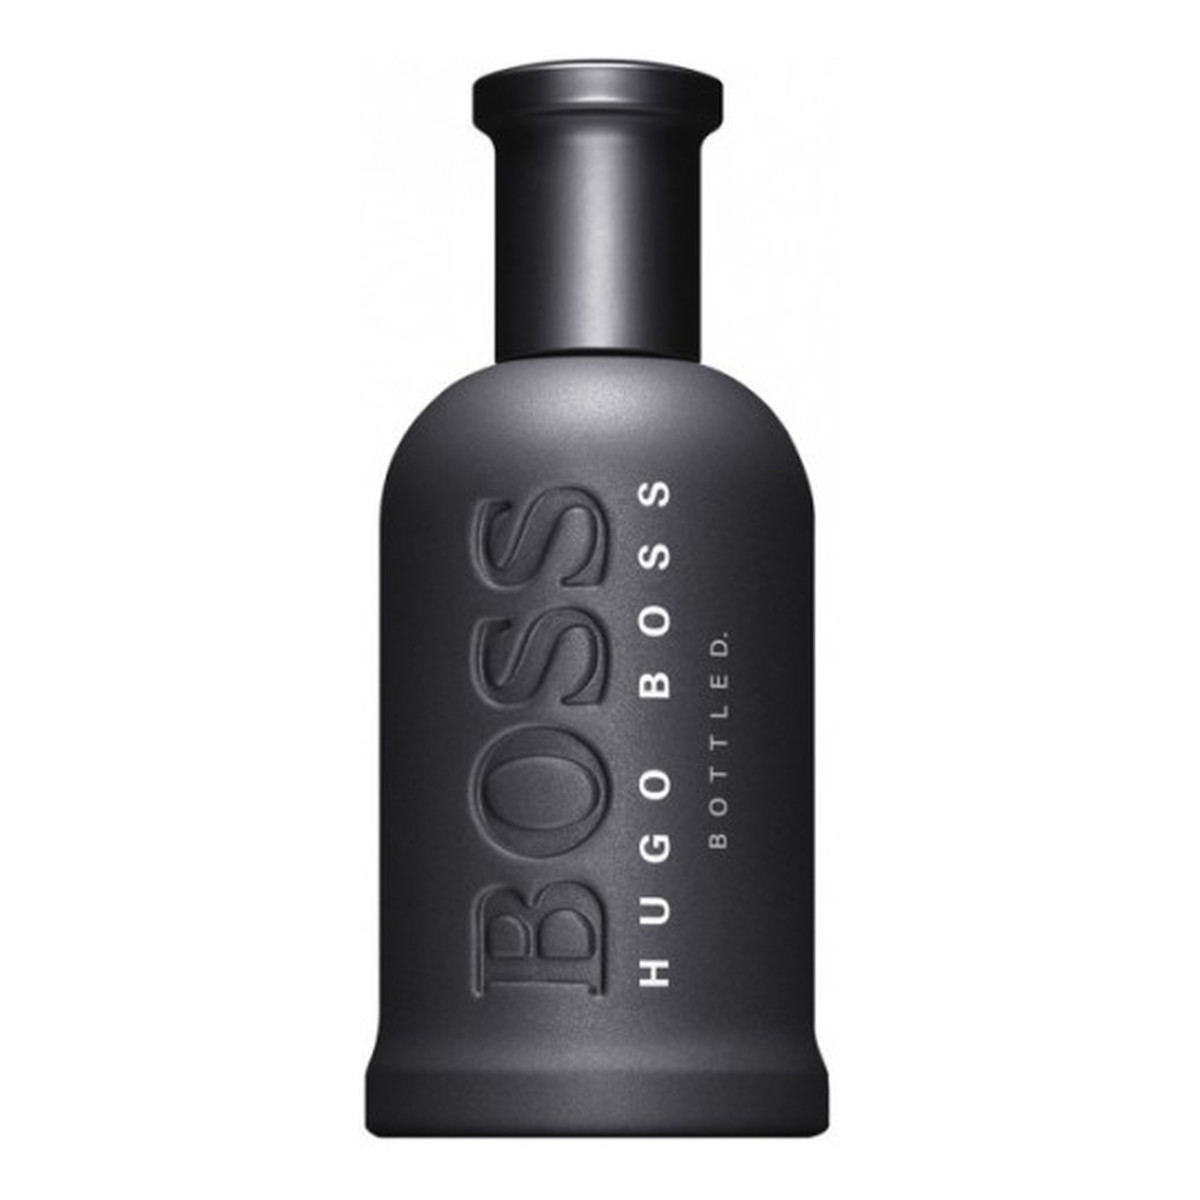 Hugo Boss Collector's Edition Bottled Woda toaletowa spray 100ml